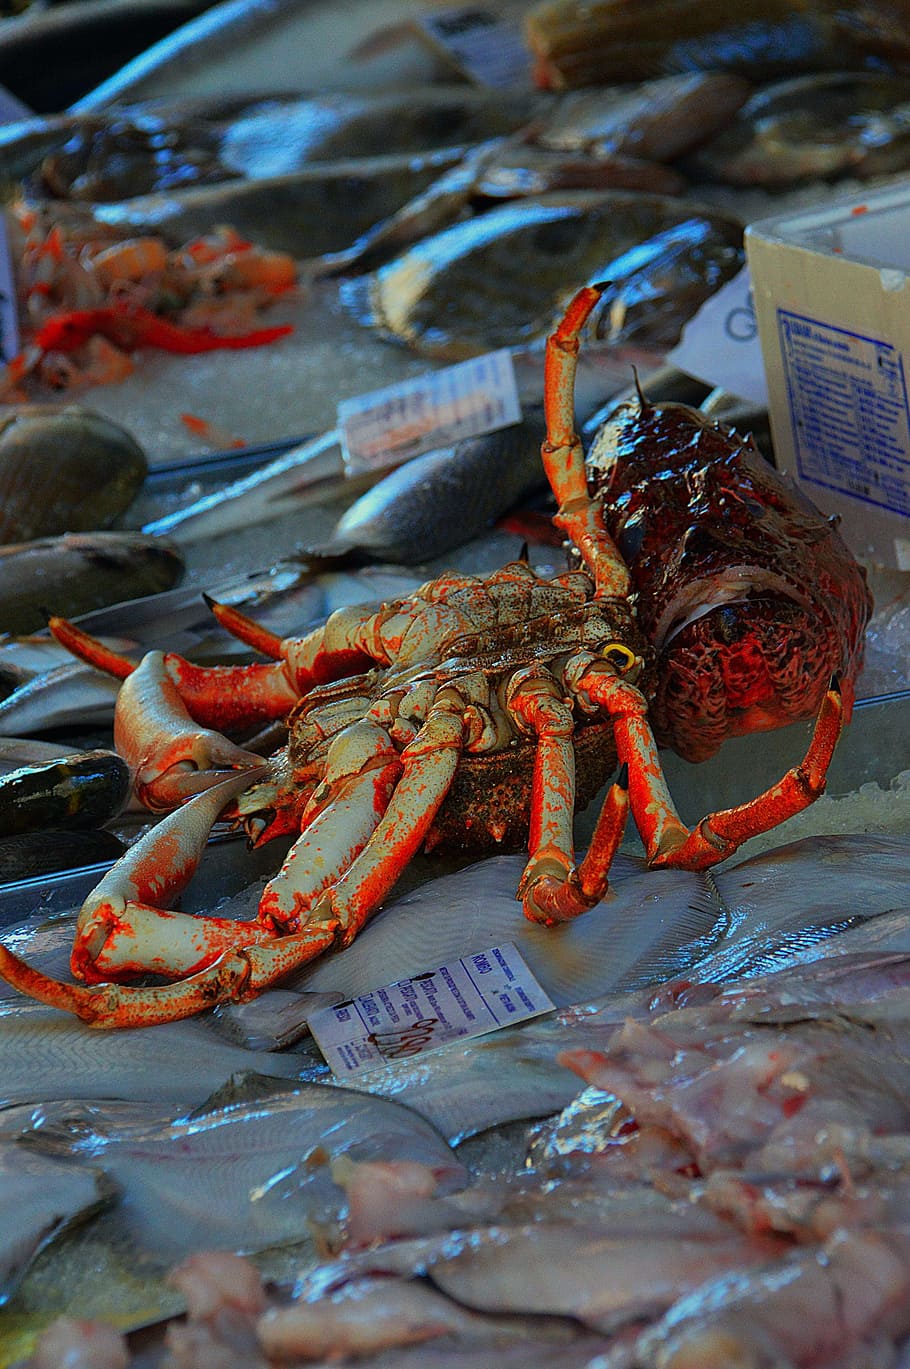 cancer, fish market, tenge fruits of, sea, living, sea creatures, food, seafood, crustacean, crab